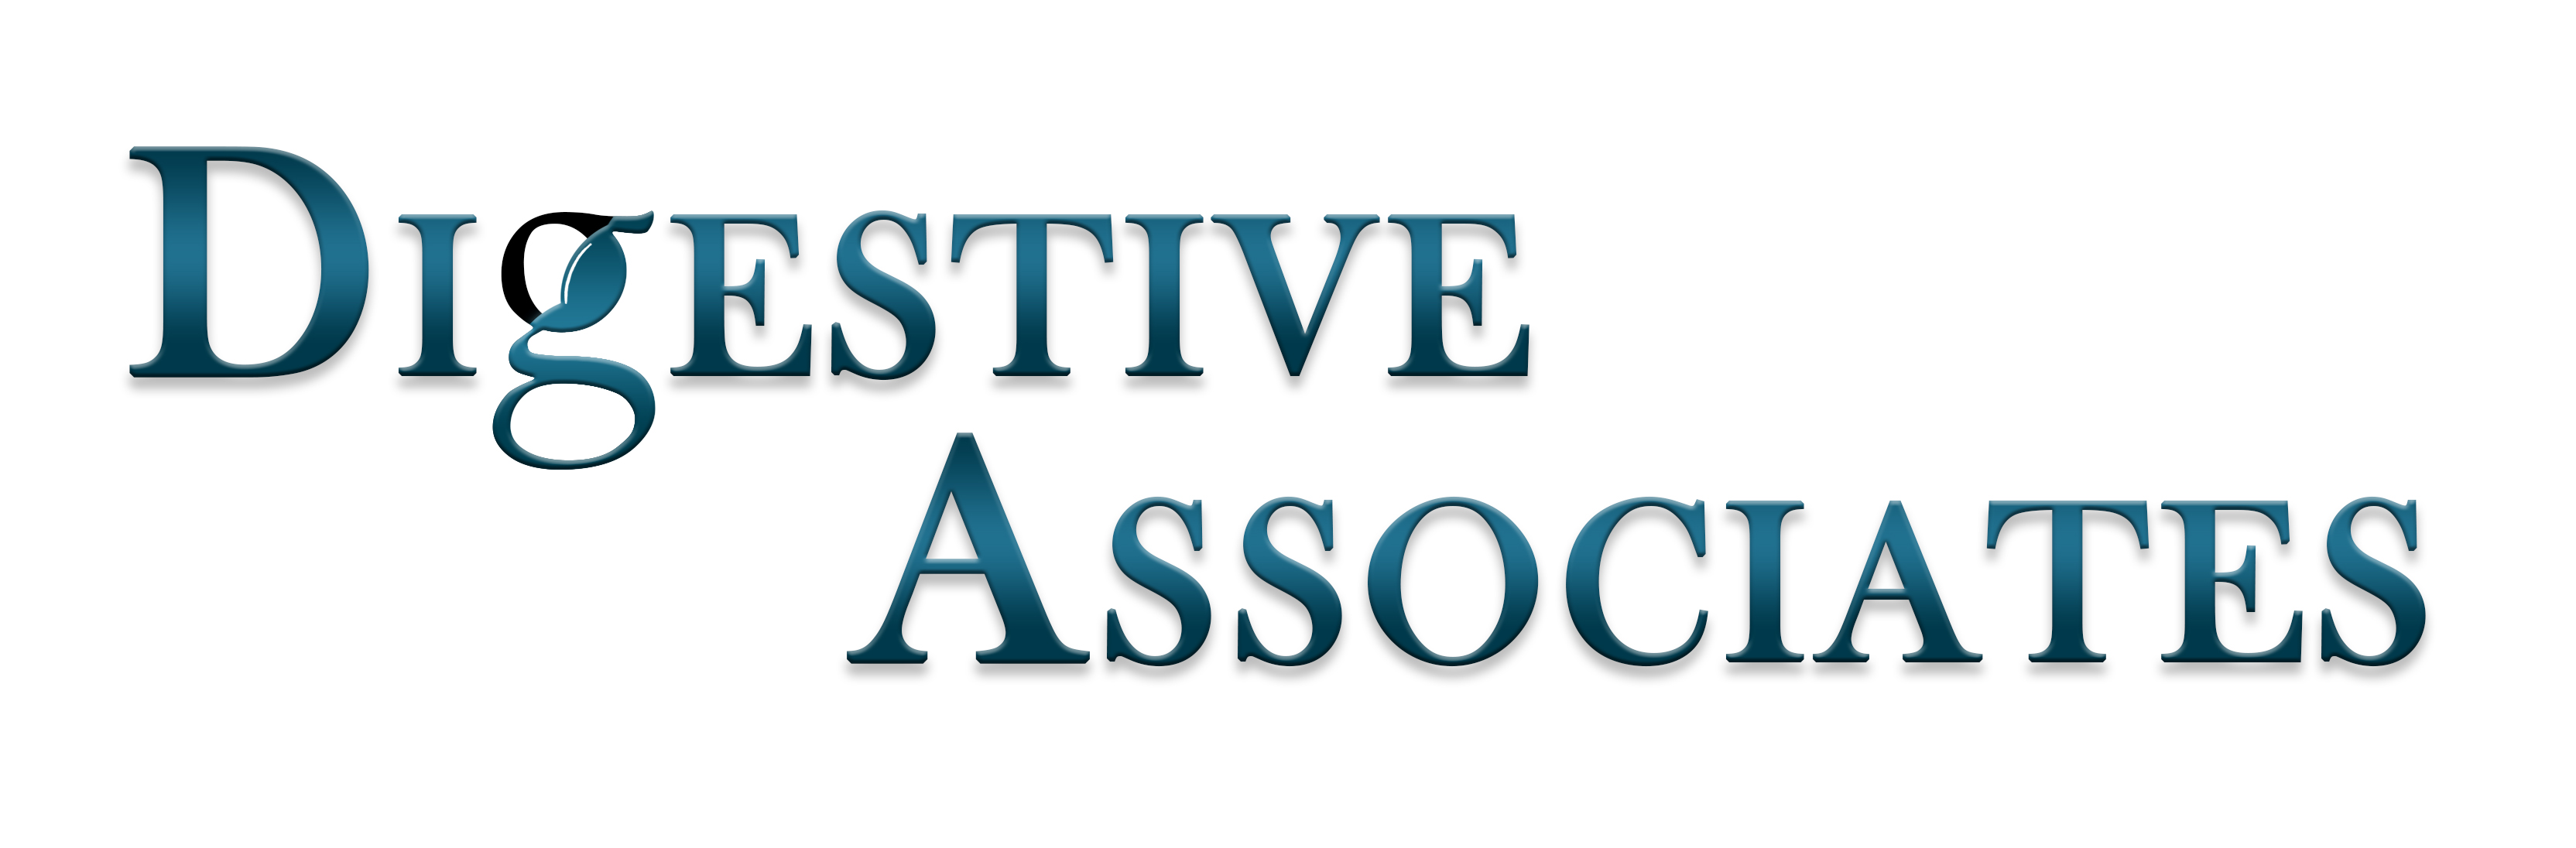 Home - Digestive Associates - gastroenterology and digestive health